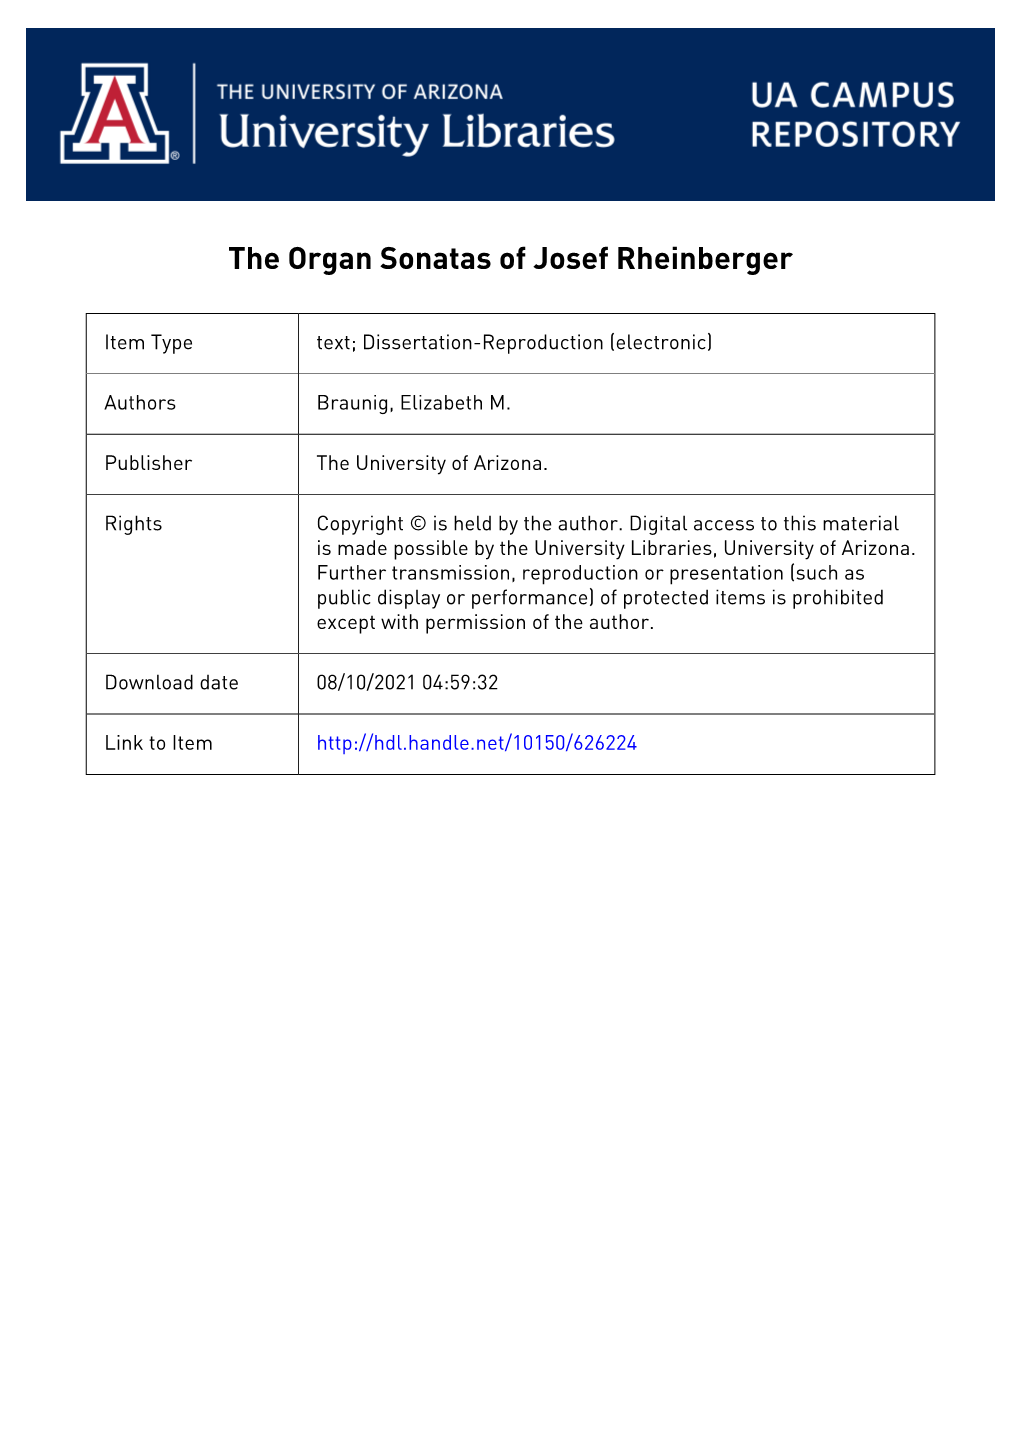 THE ORGAN SONATAS of JOSEF RHEINBERGER Elizabeth M